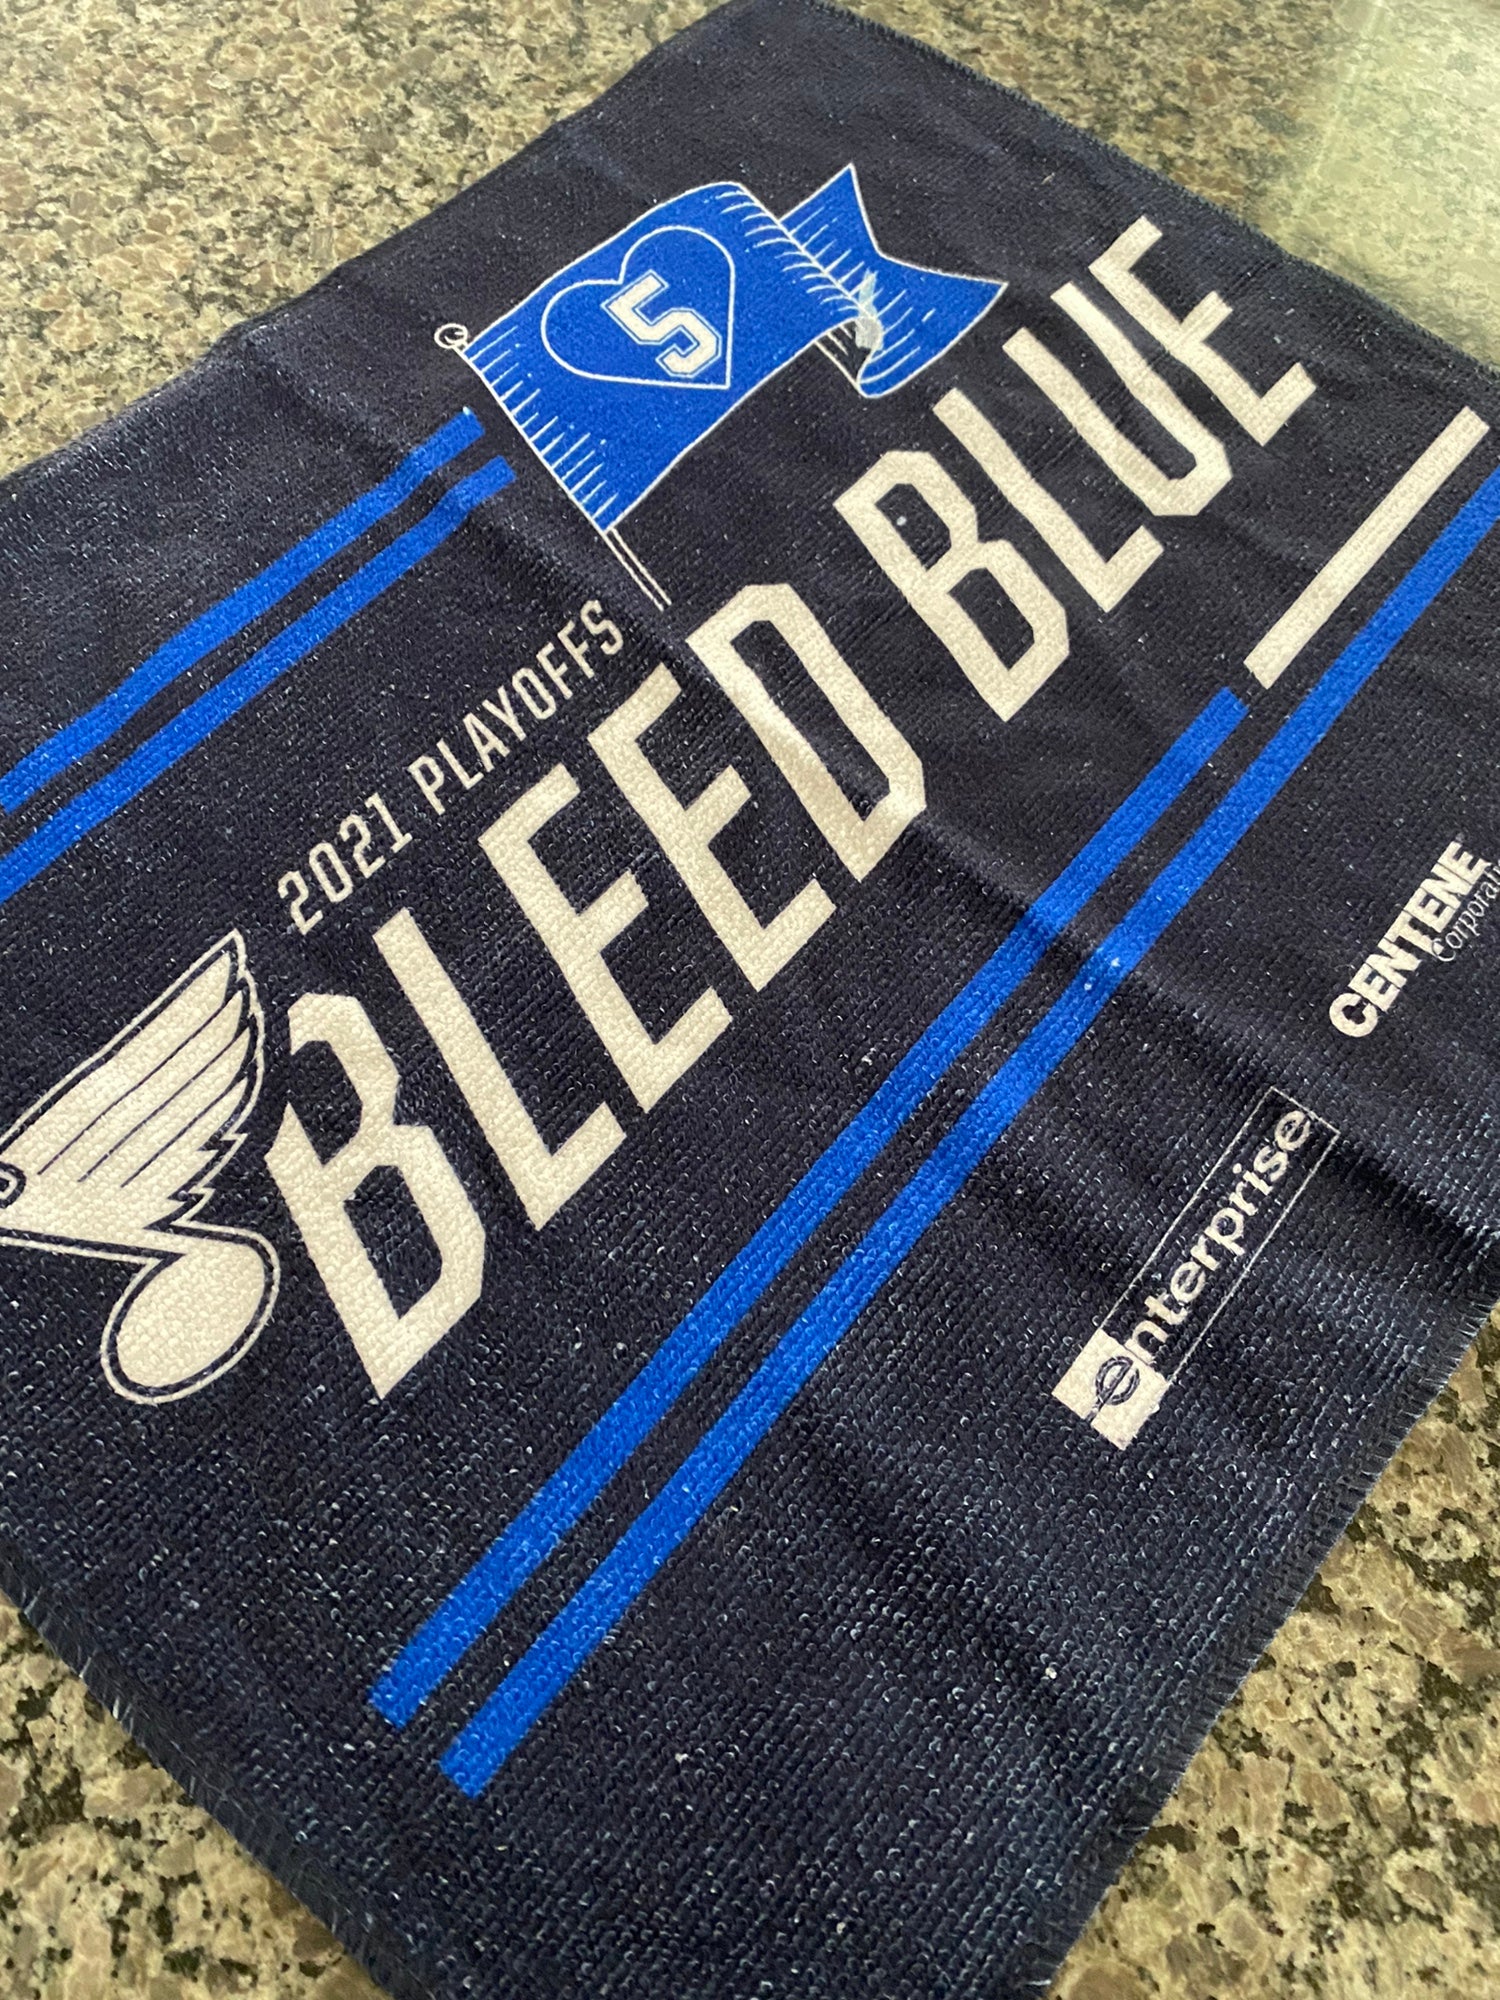 St. Louis Blues 2021 Playoff Rally Towel SGA 5/23/21